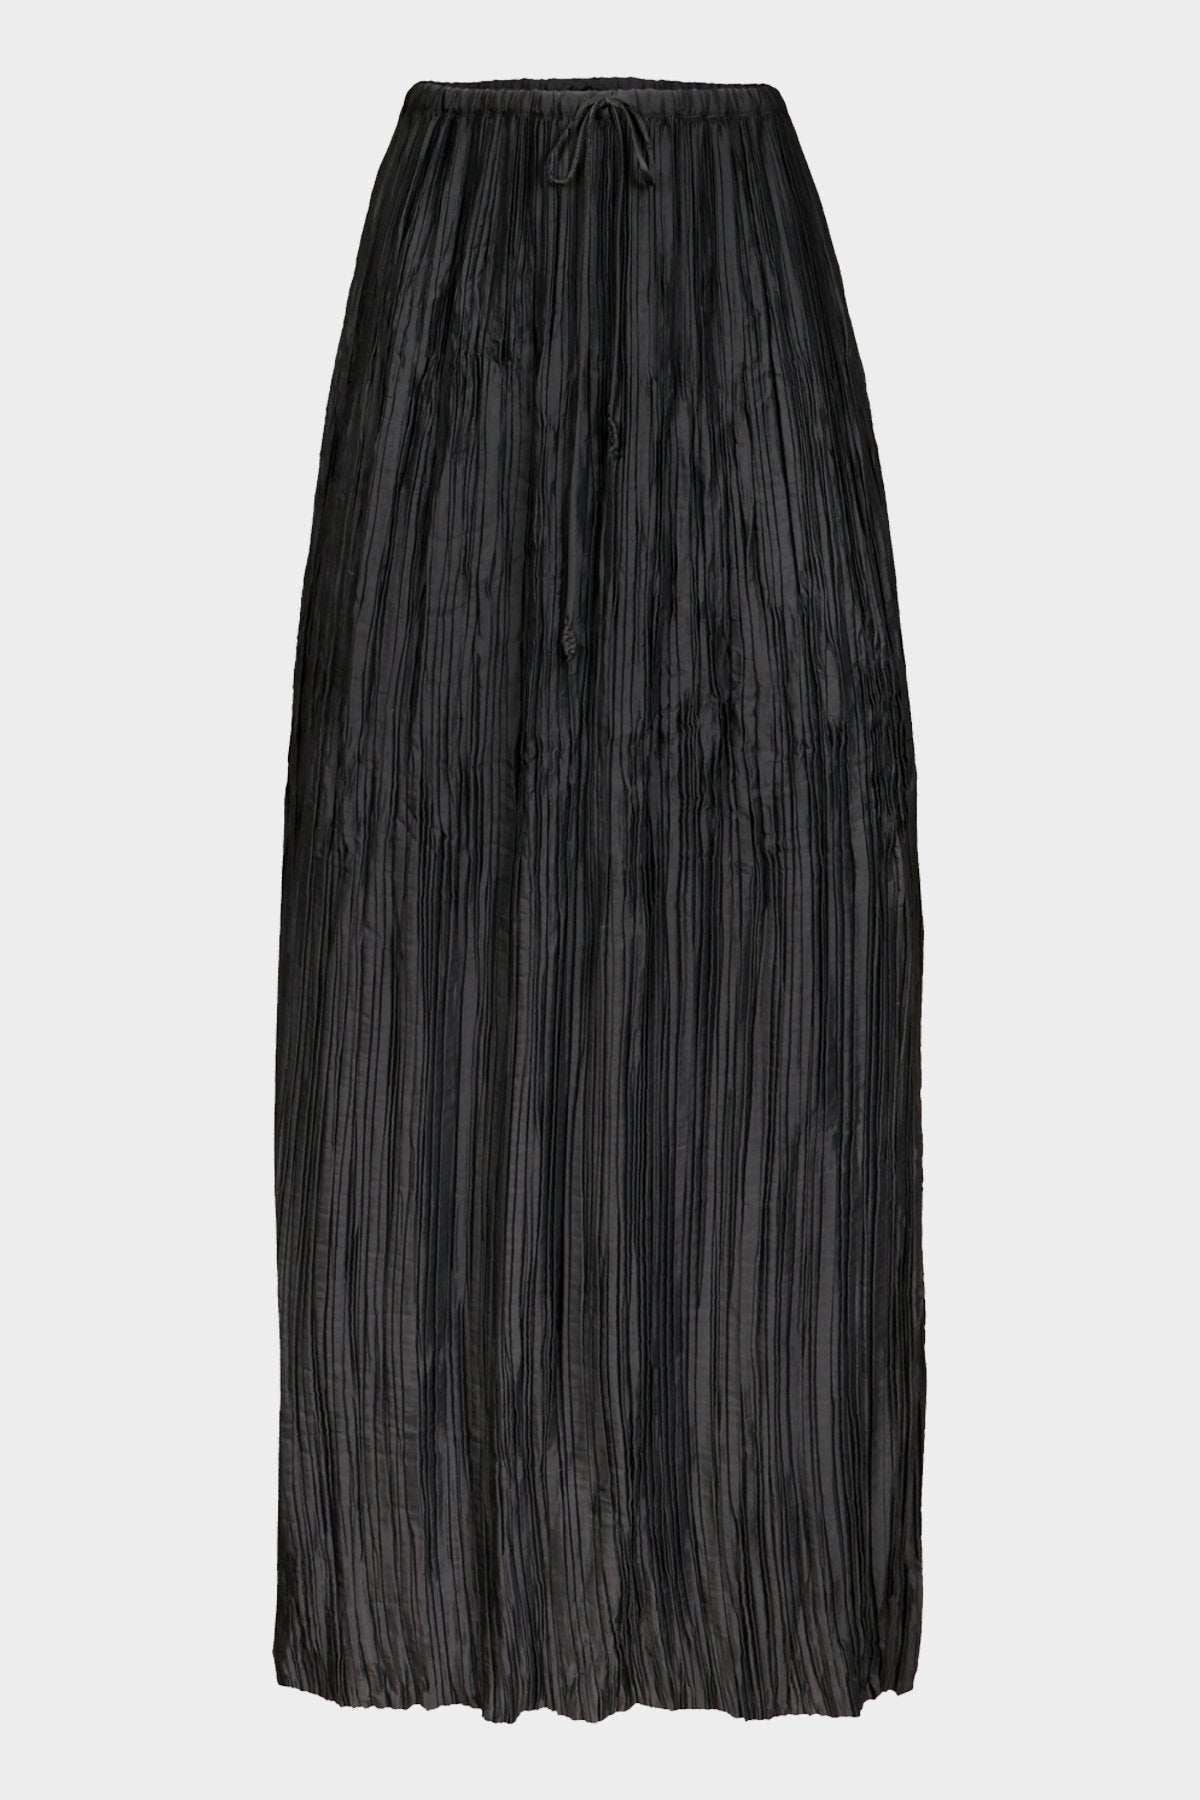 Dioni Midi Skirt in Noir - shop-olivia.com